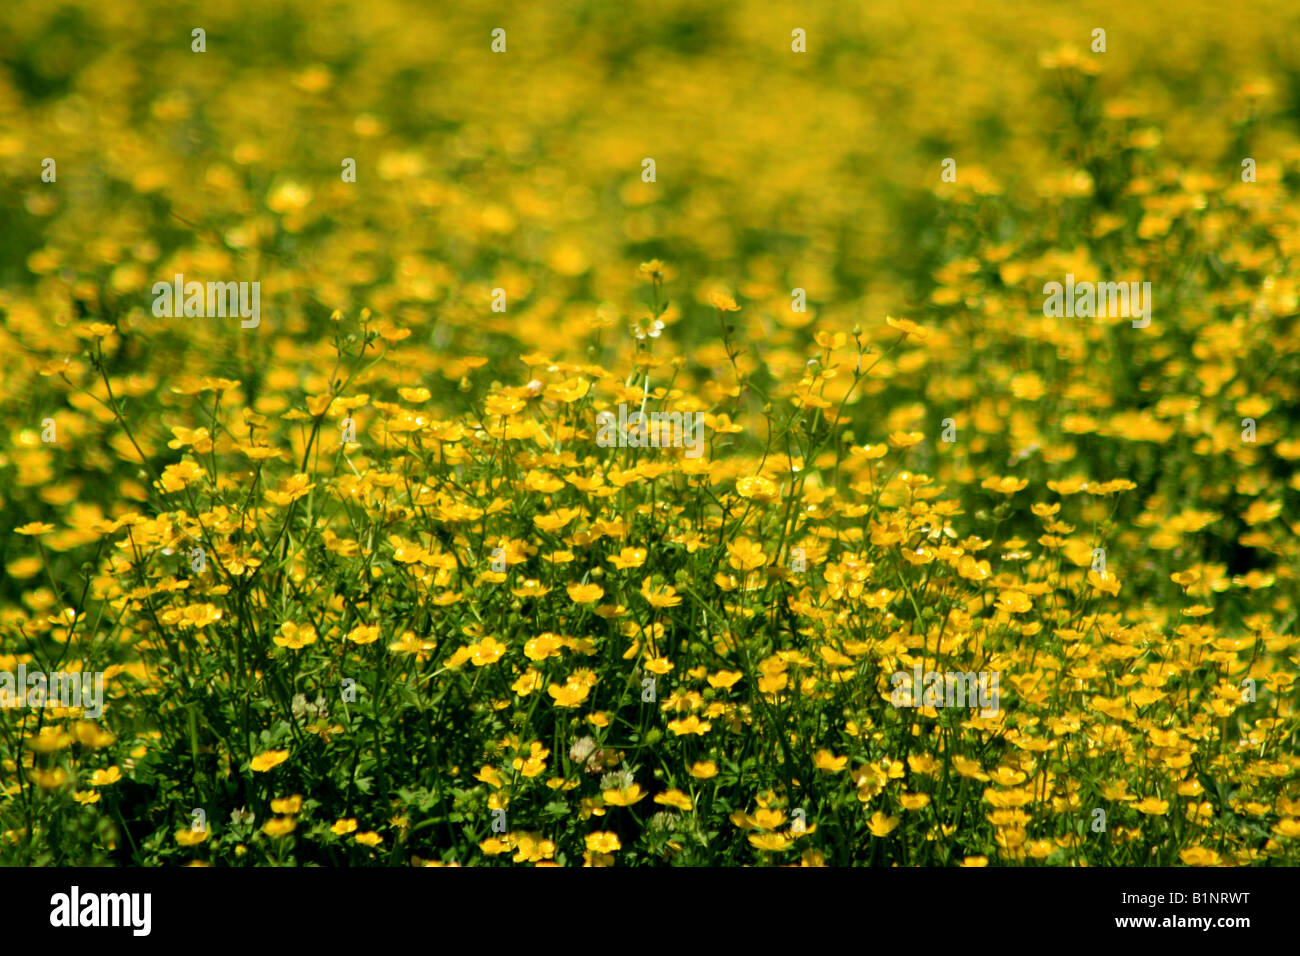 A field full of yellow rocket (Barbarea vulgaris) flowers. Stock Photo